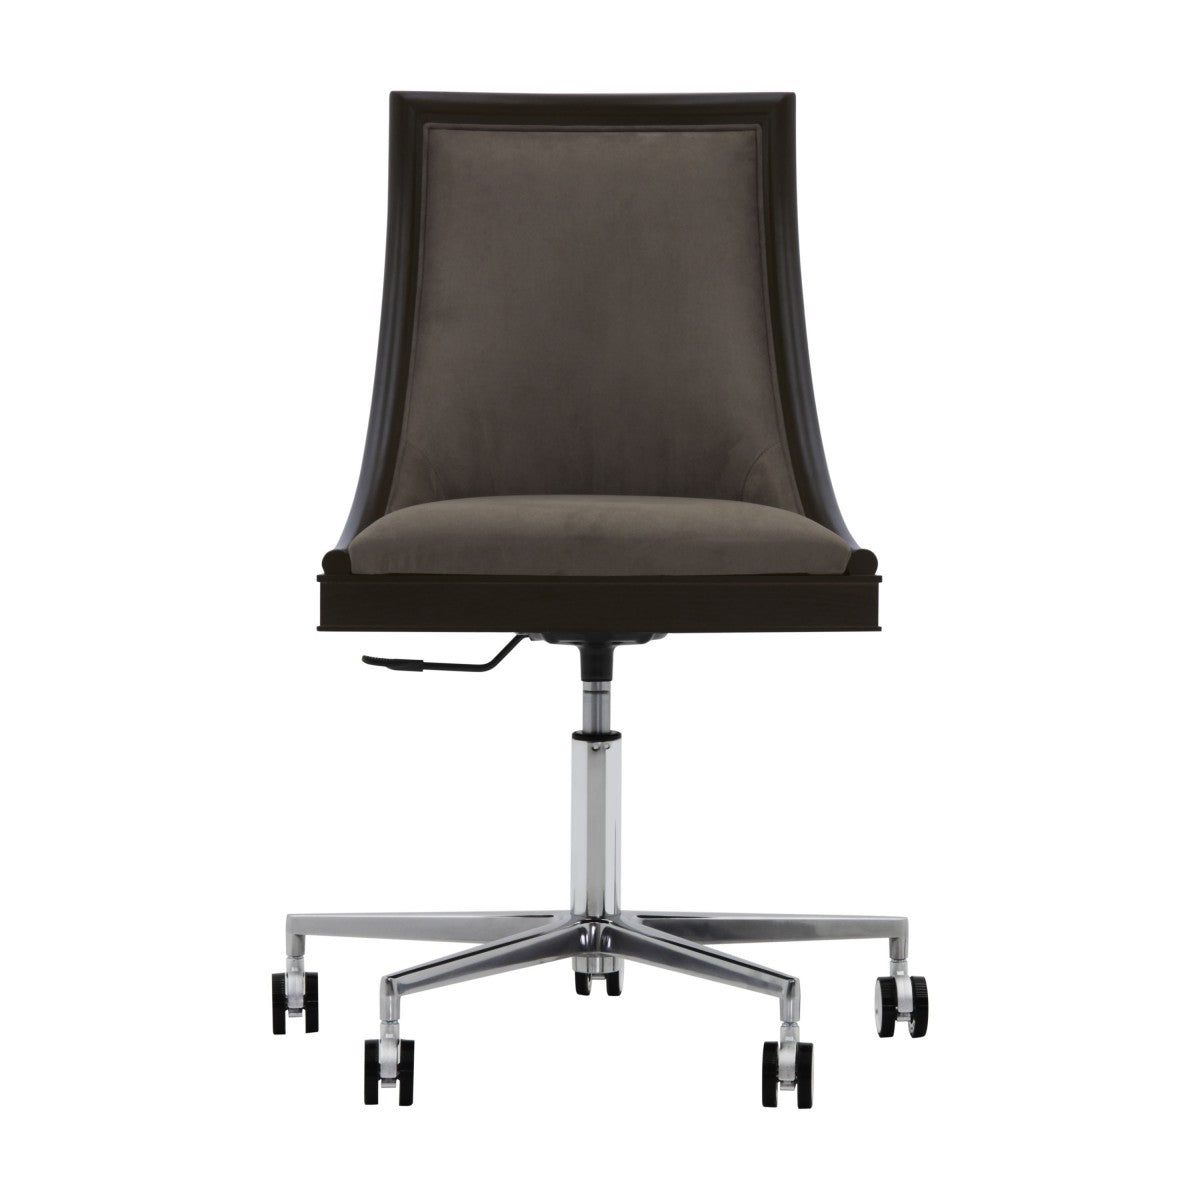 Amina Bespoke Upholstered Luxury Executive Swivel Office Desk Chair MS634S Custom Made To Order